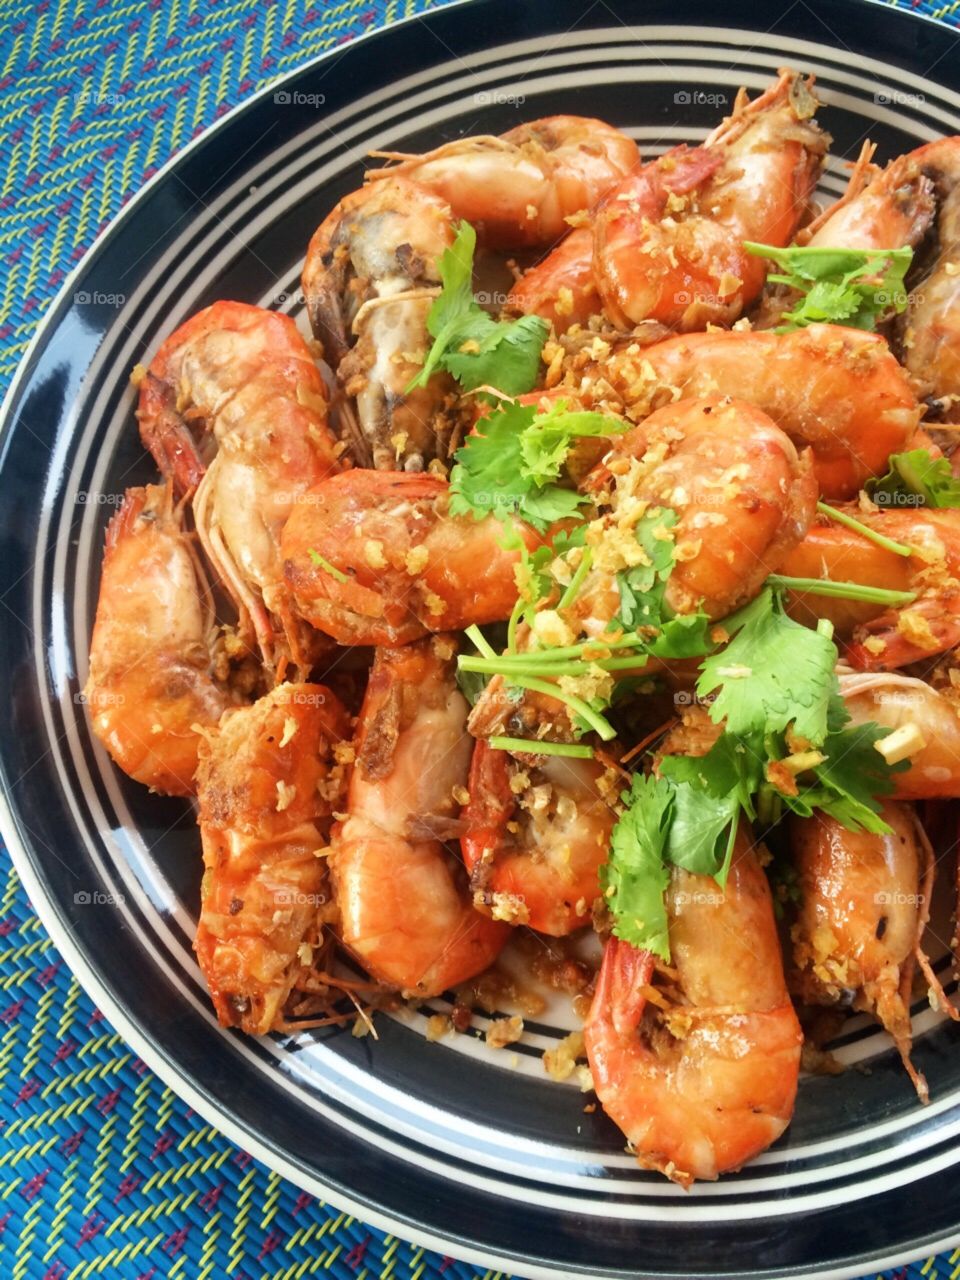 Stir-fried shrimp with Garlic. The tradional Thai food.